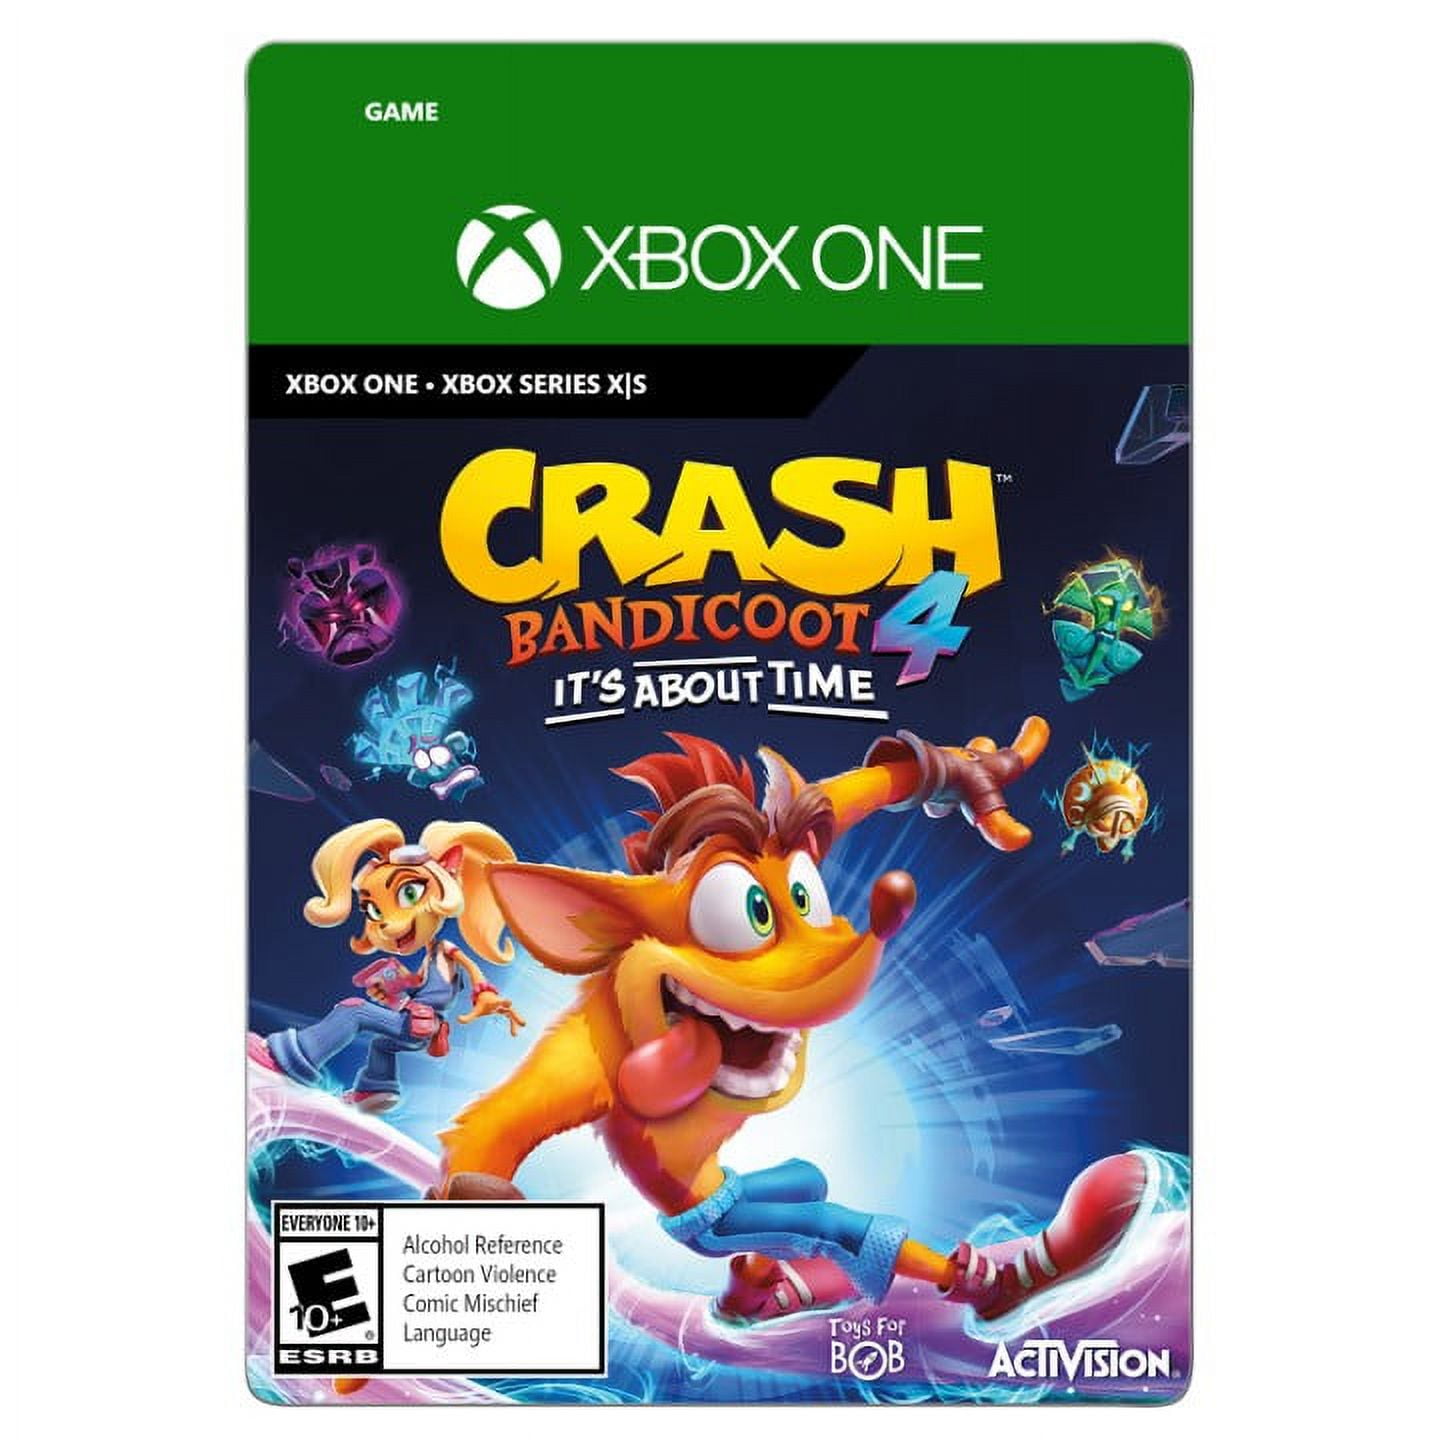 Crash Bandicoot 4: It's About Time vaza e sugere game para PS4 e Xbox One